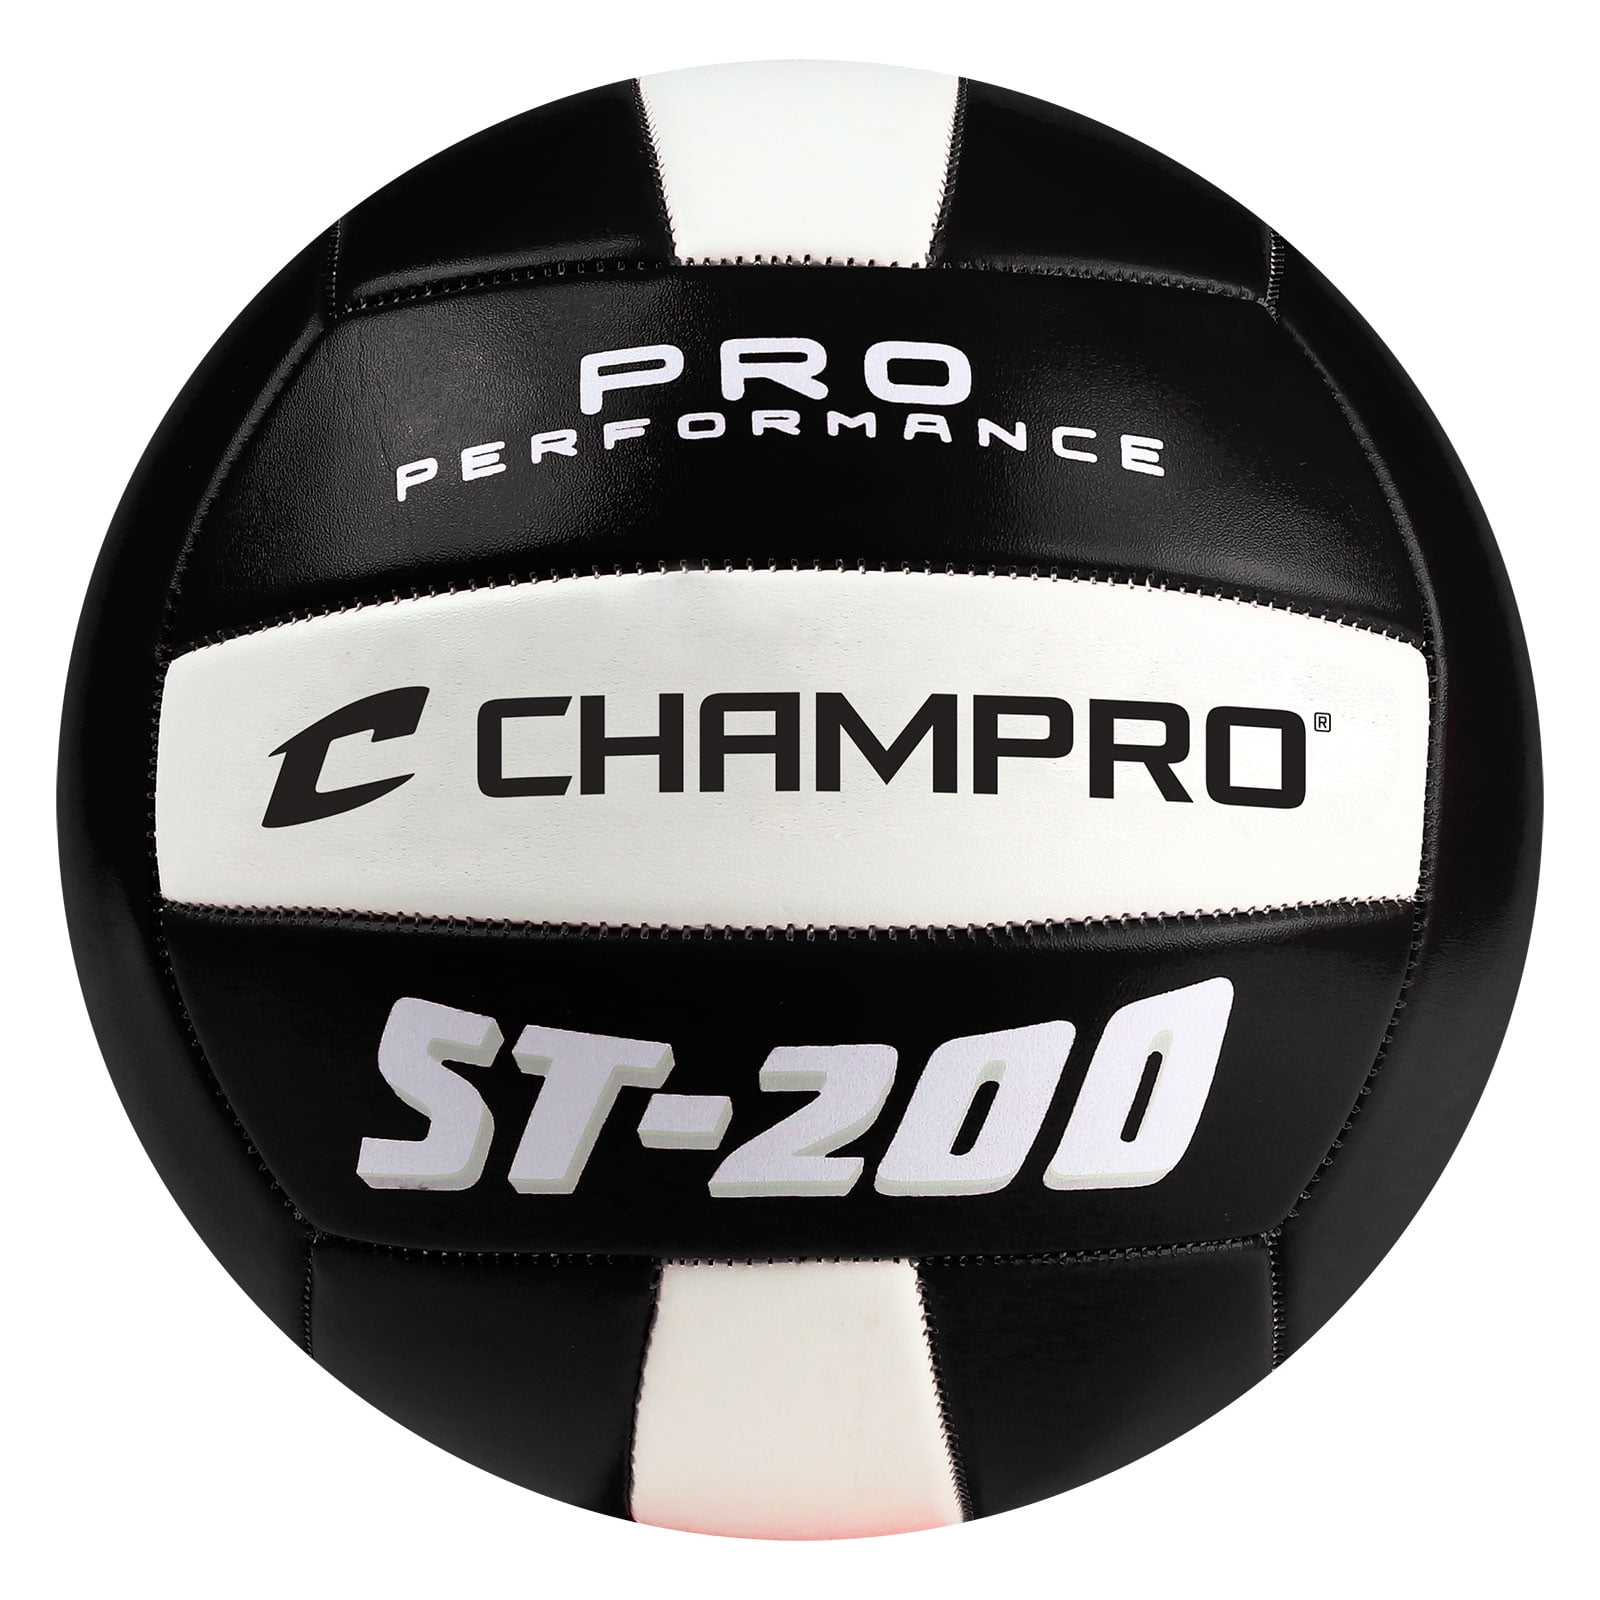 Champro Prem Soft Touch Composite Volleyball White/Black 